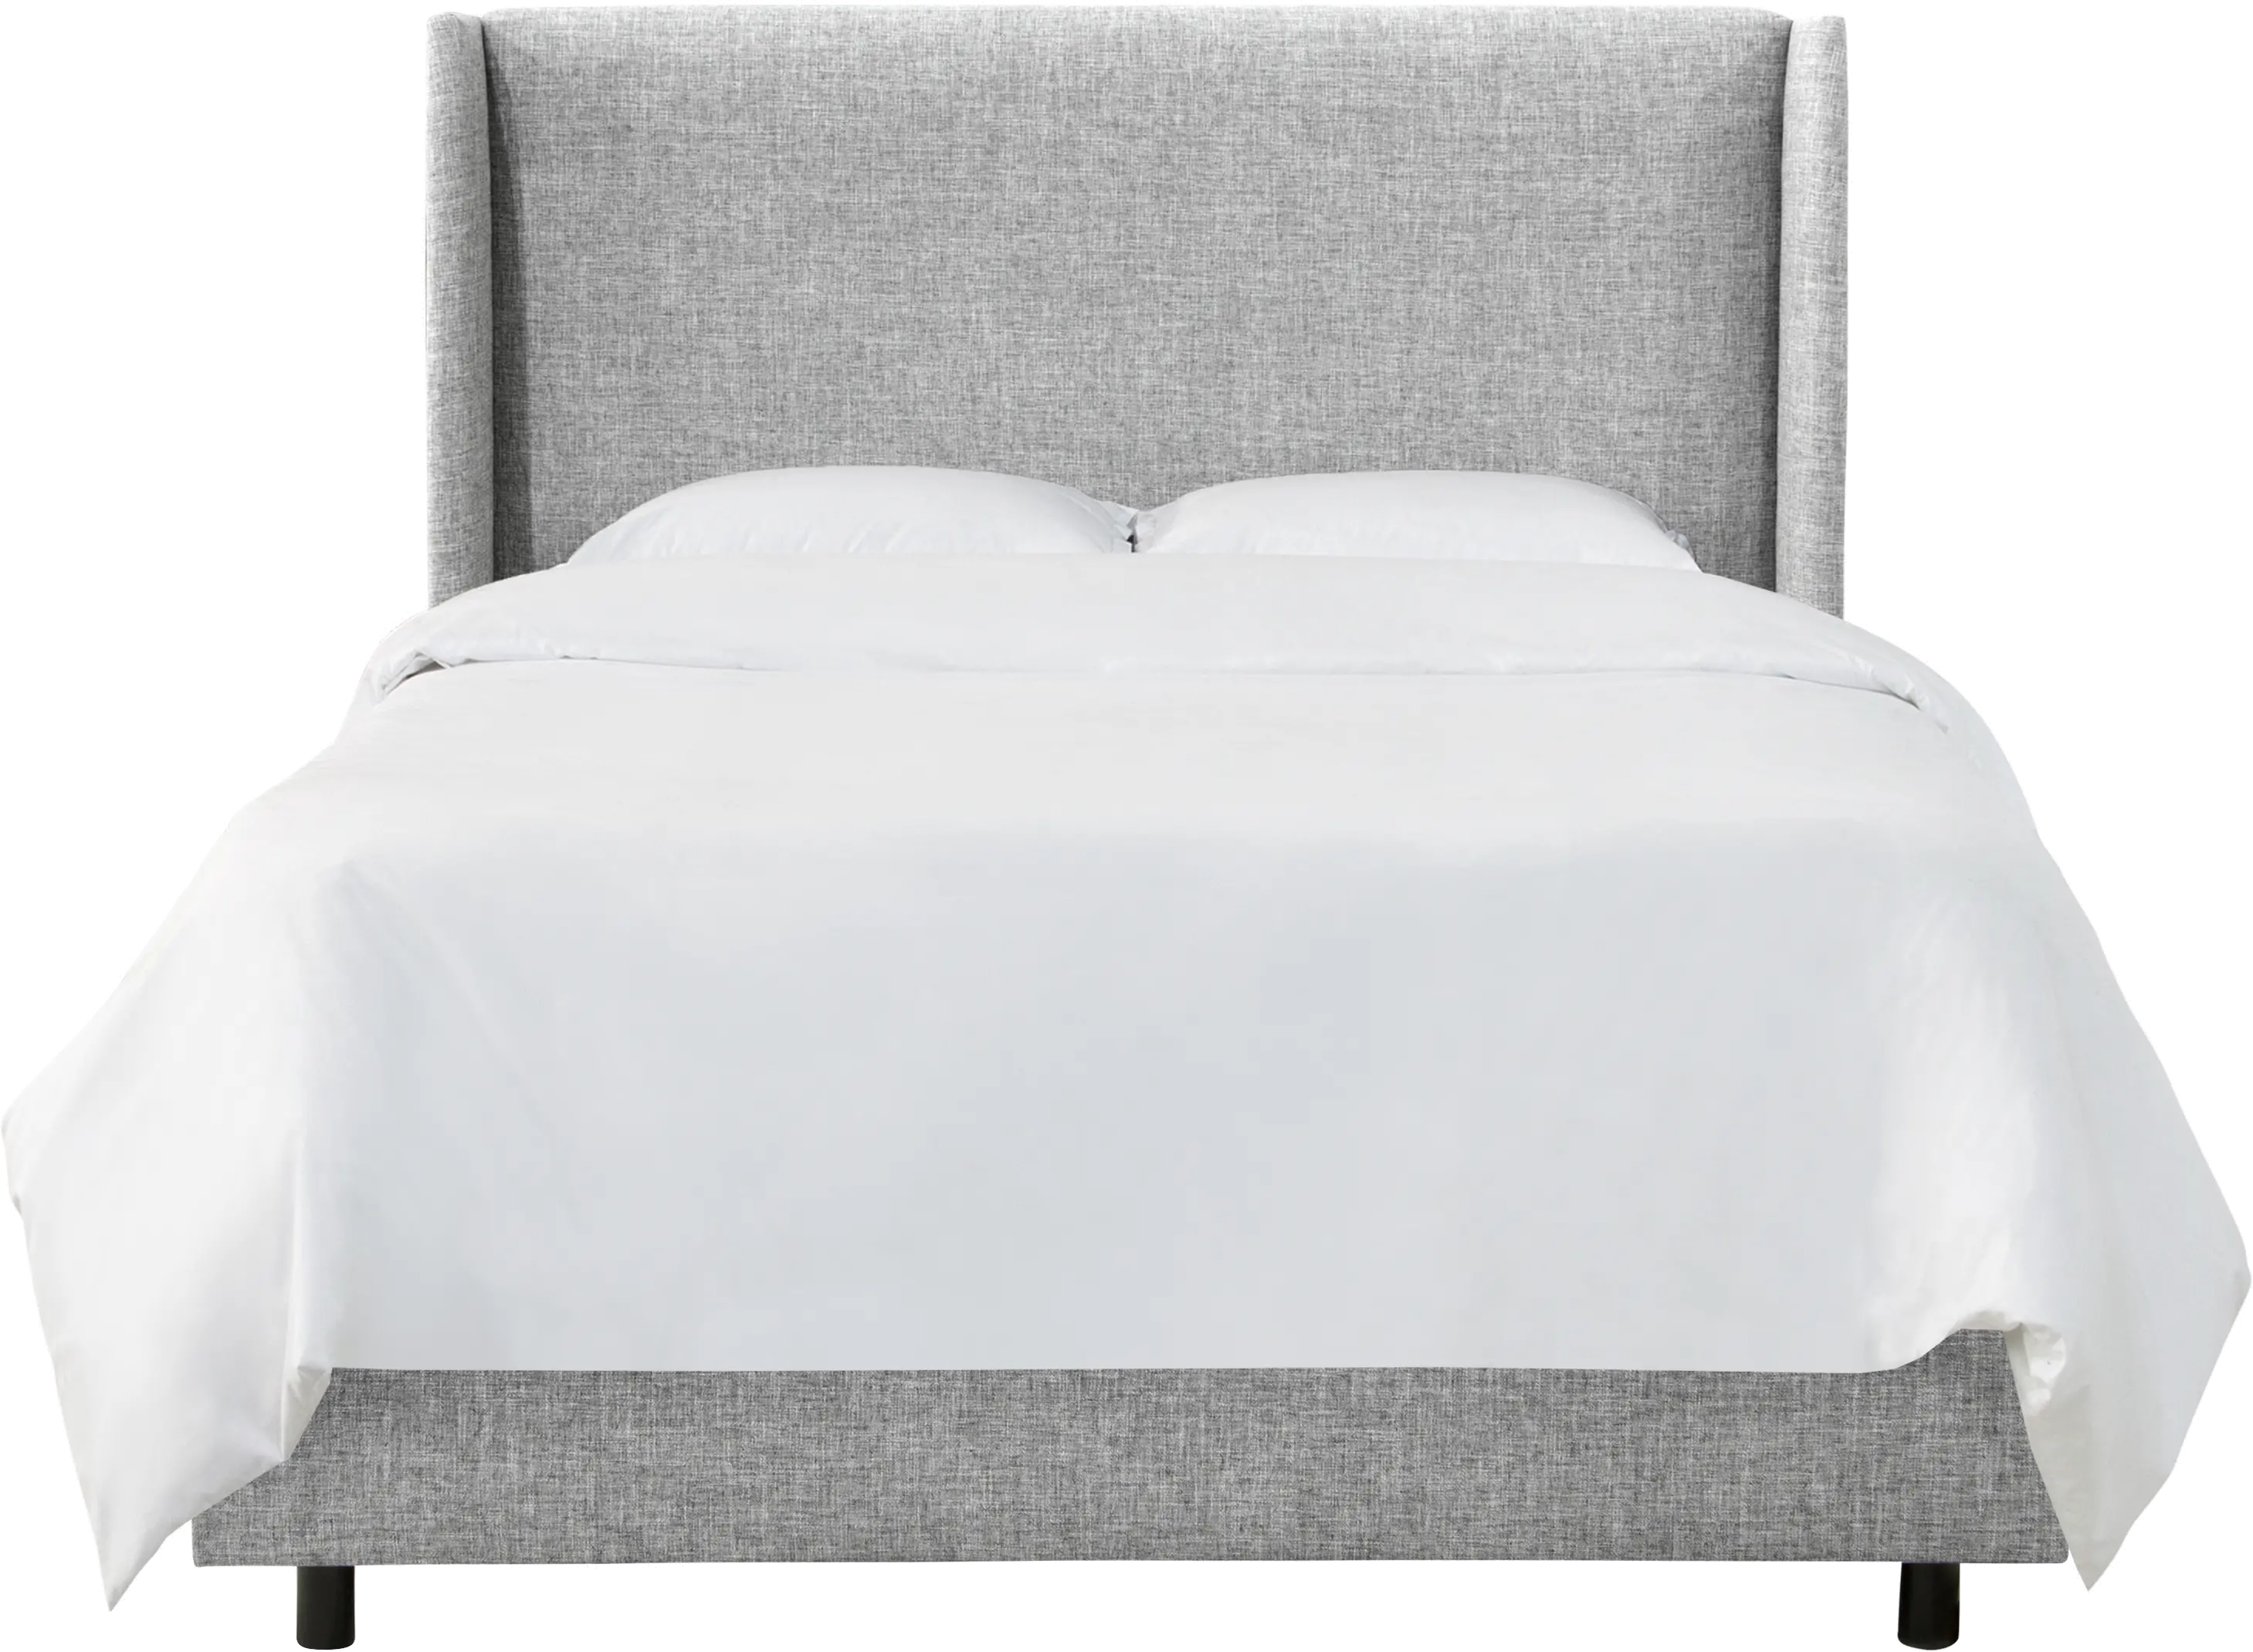 Sasha Gray Curved Wingback Full Bed - Skyline Furniture